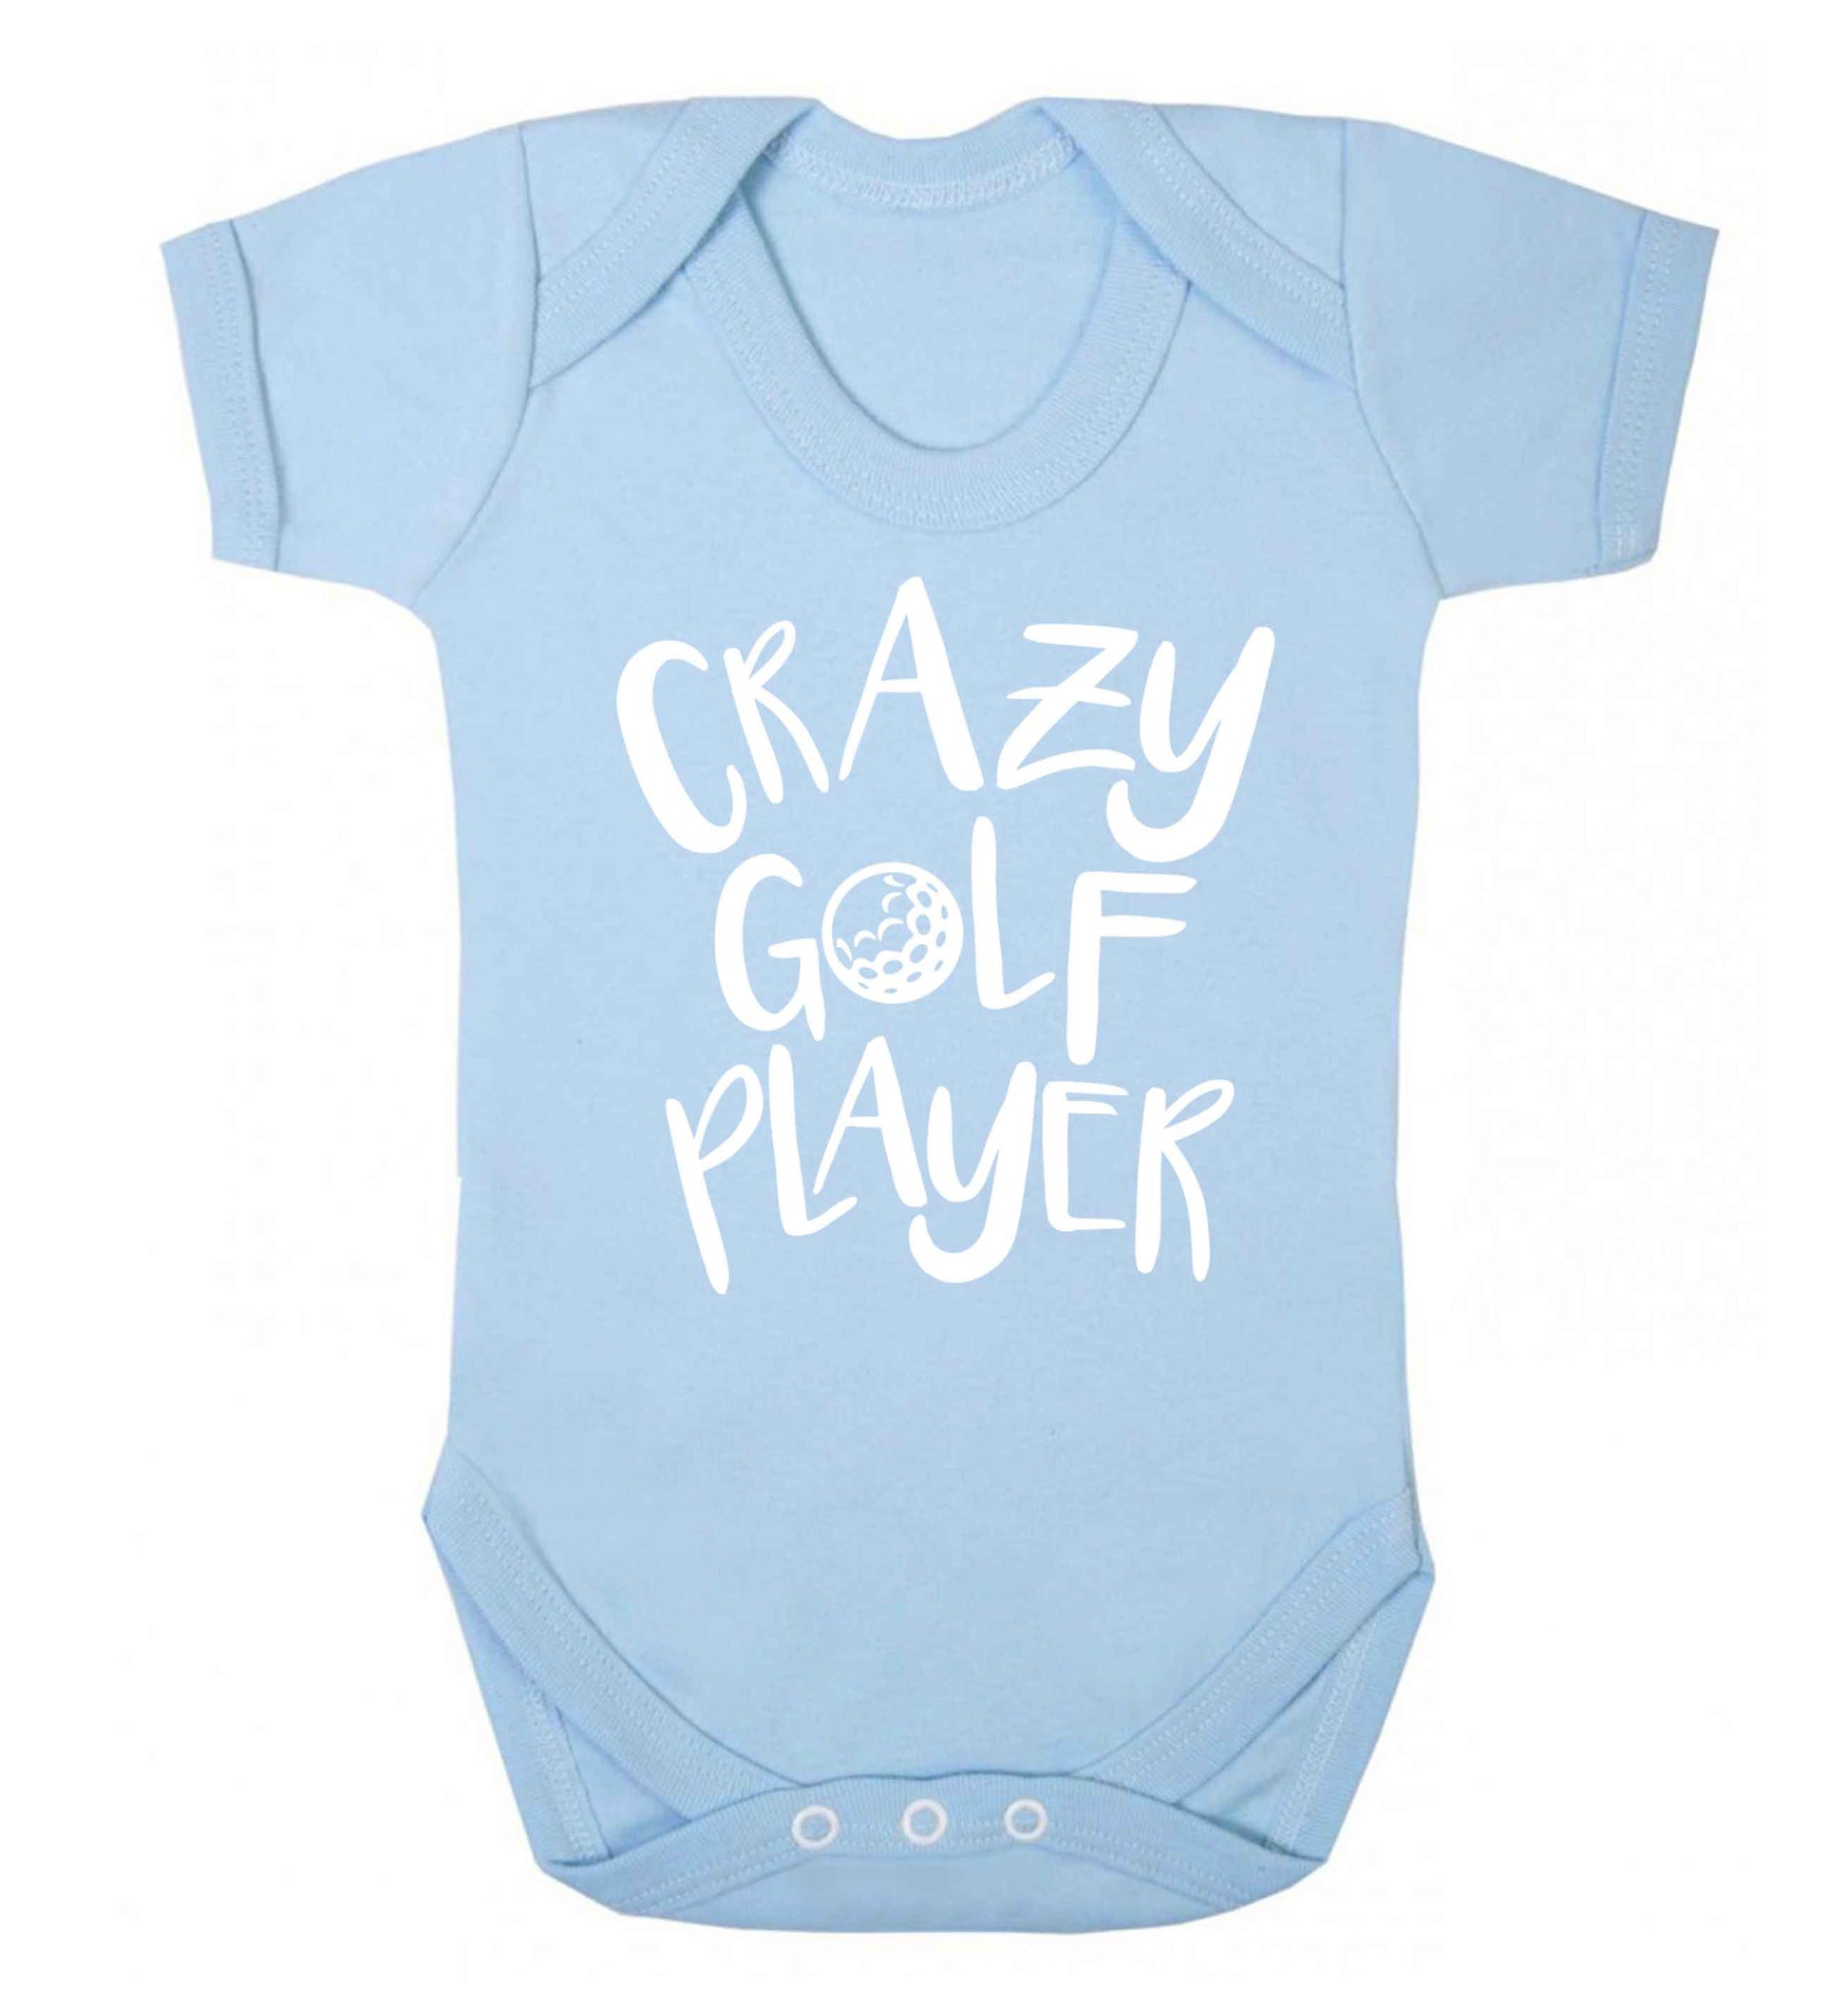 Crazy golf player Baby Vest pale blue 18-24 months